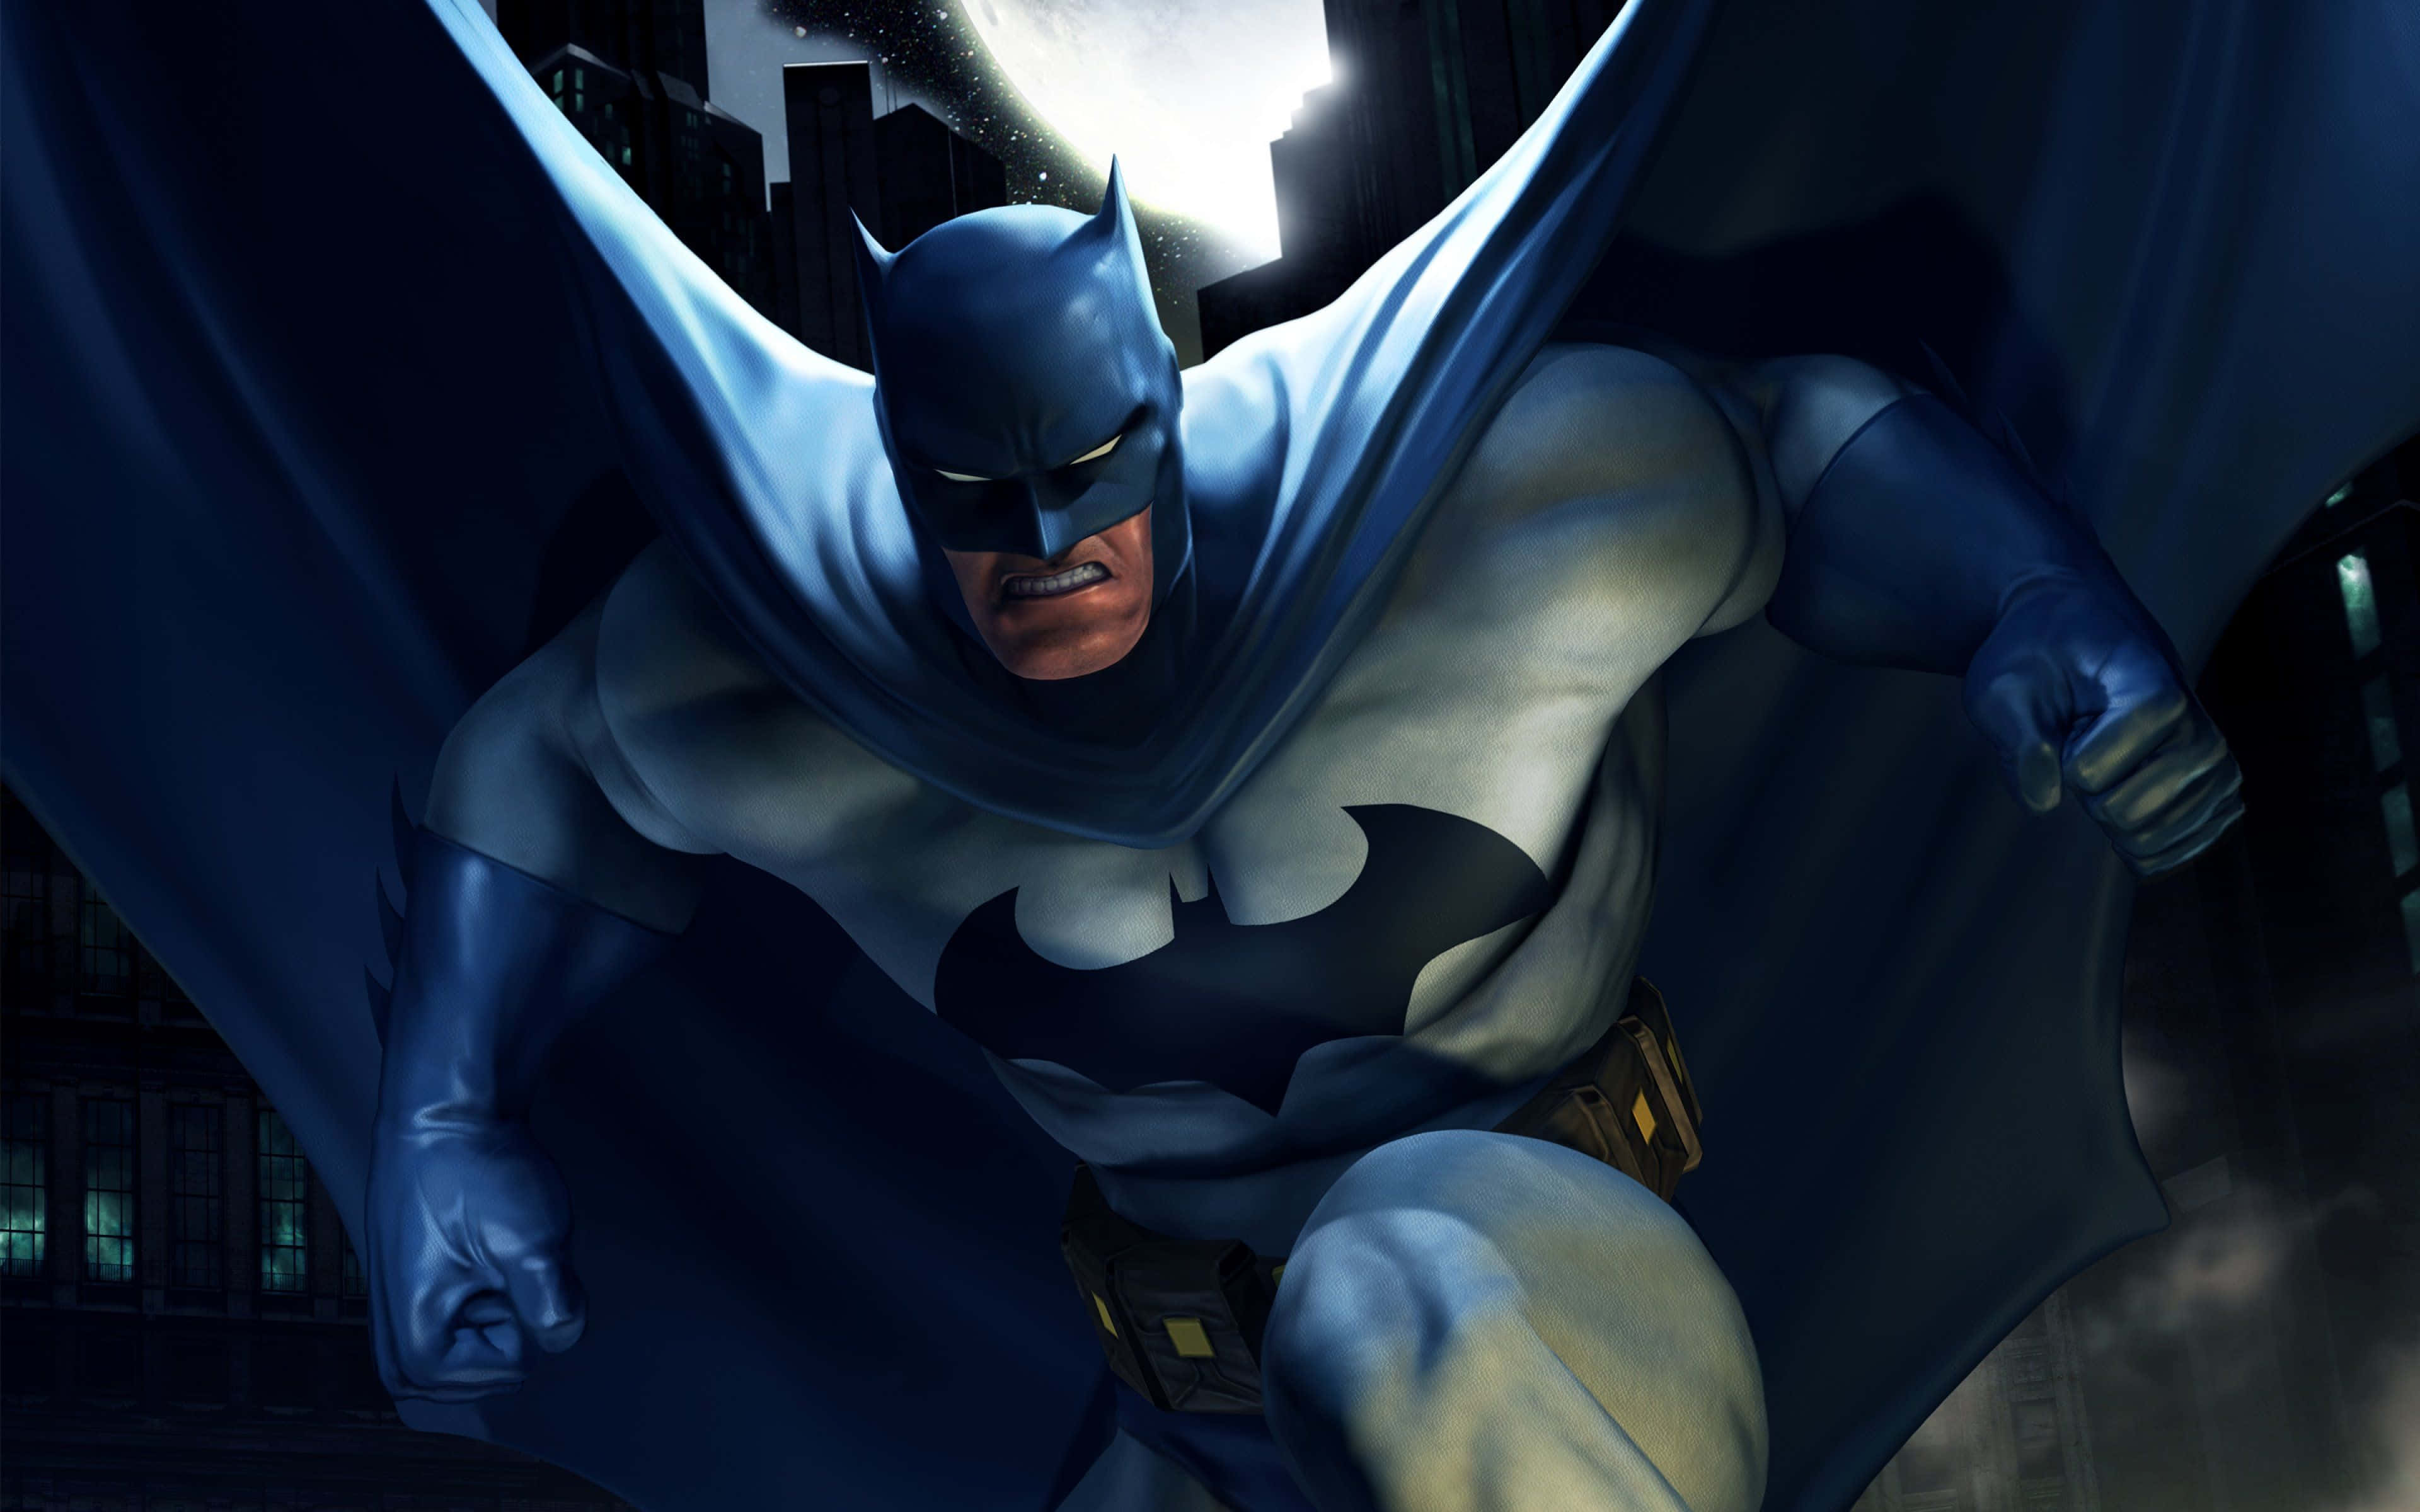 R batman. Бэтмен Марвел. DC Universe Batman. Супергерой комикс Бэтмен.